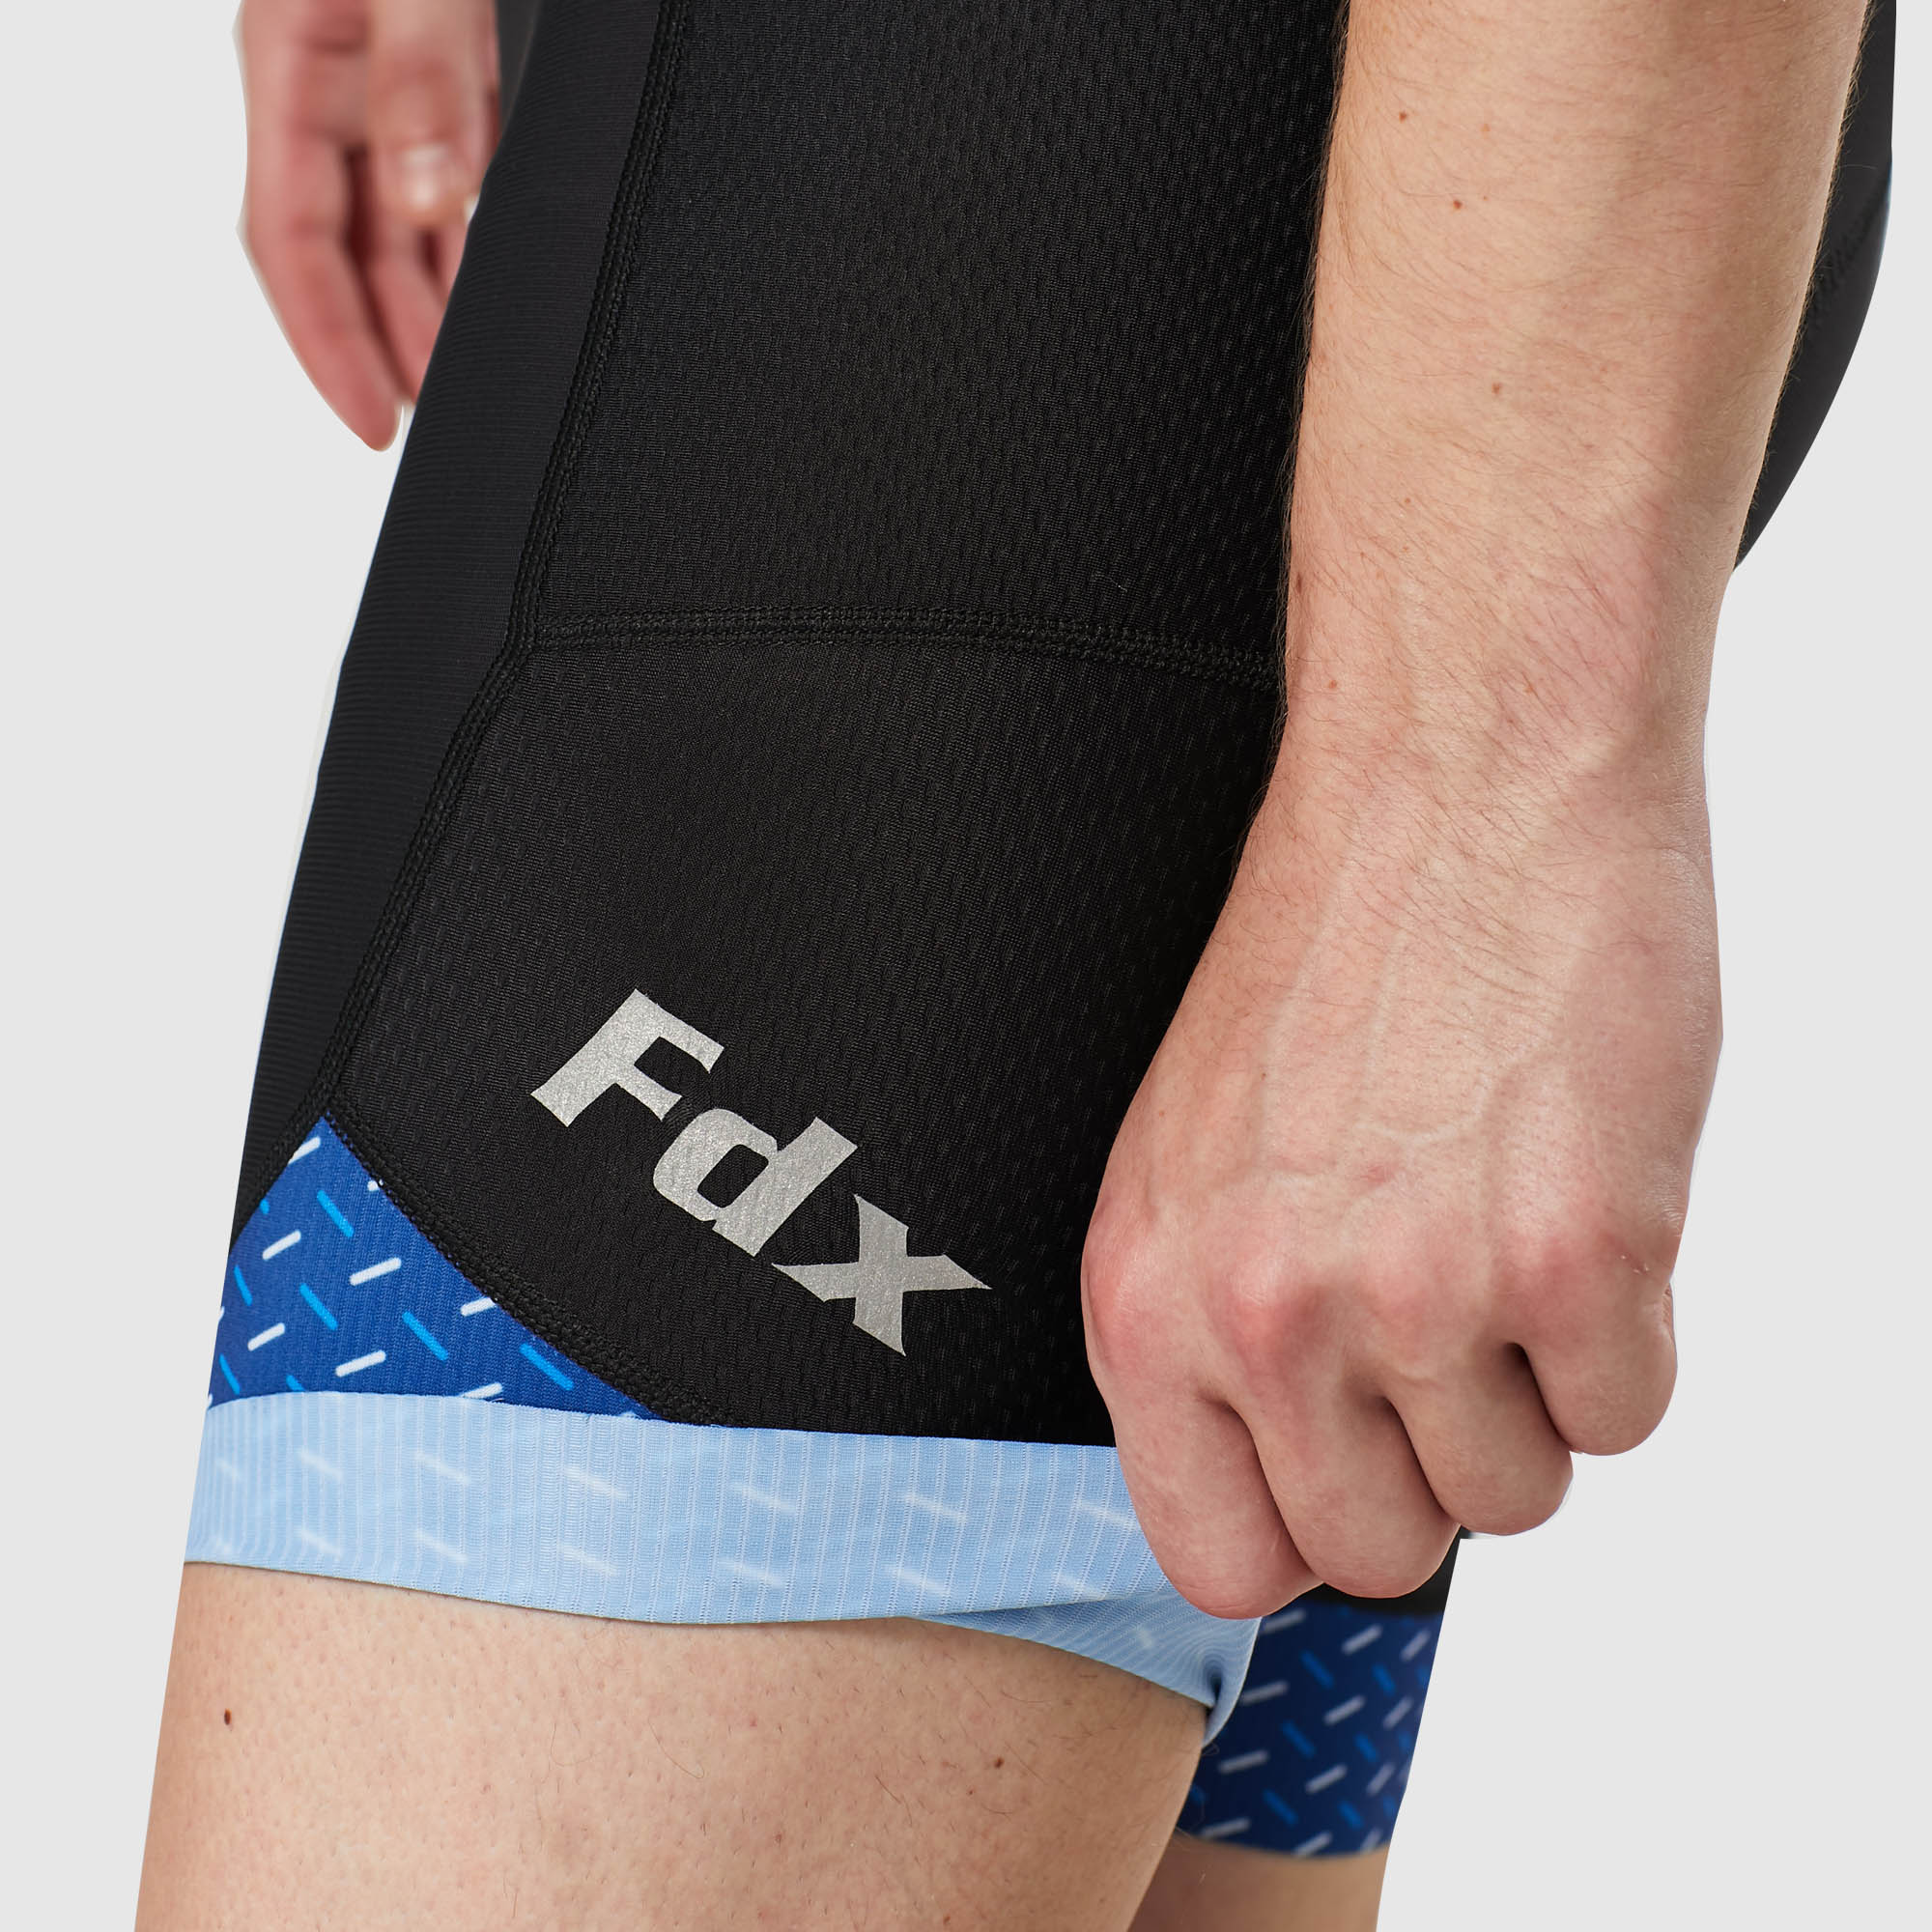 Fdx Epifit Men's All Weather Compression Shorts Blue